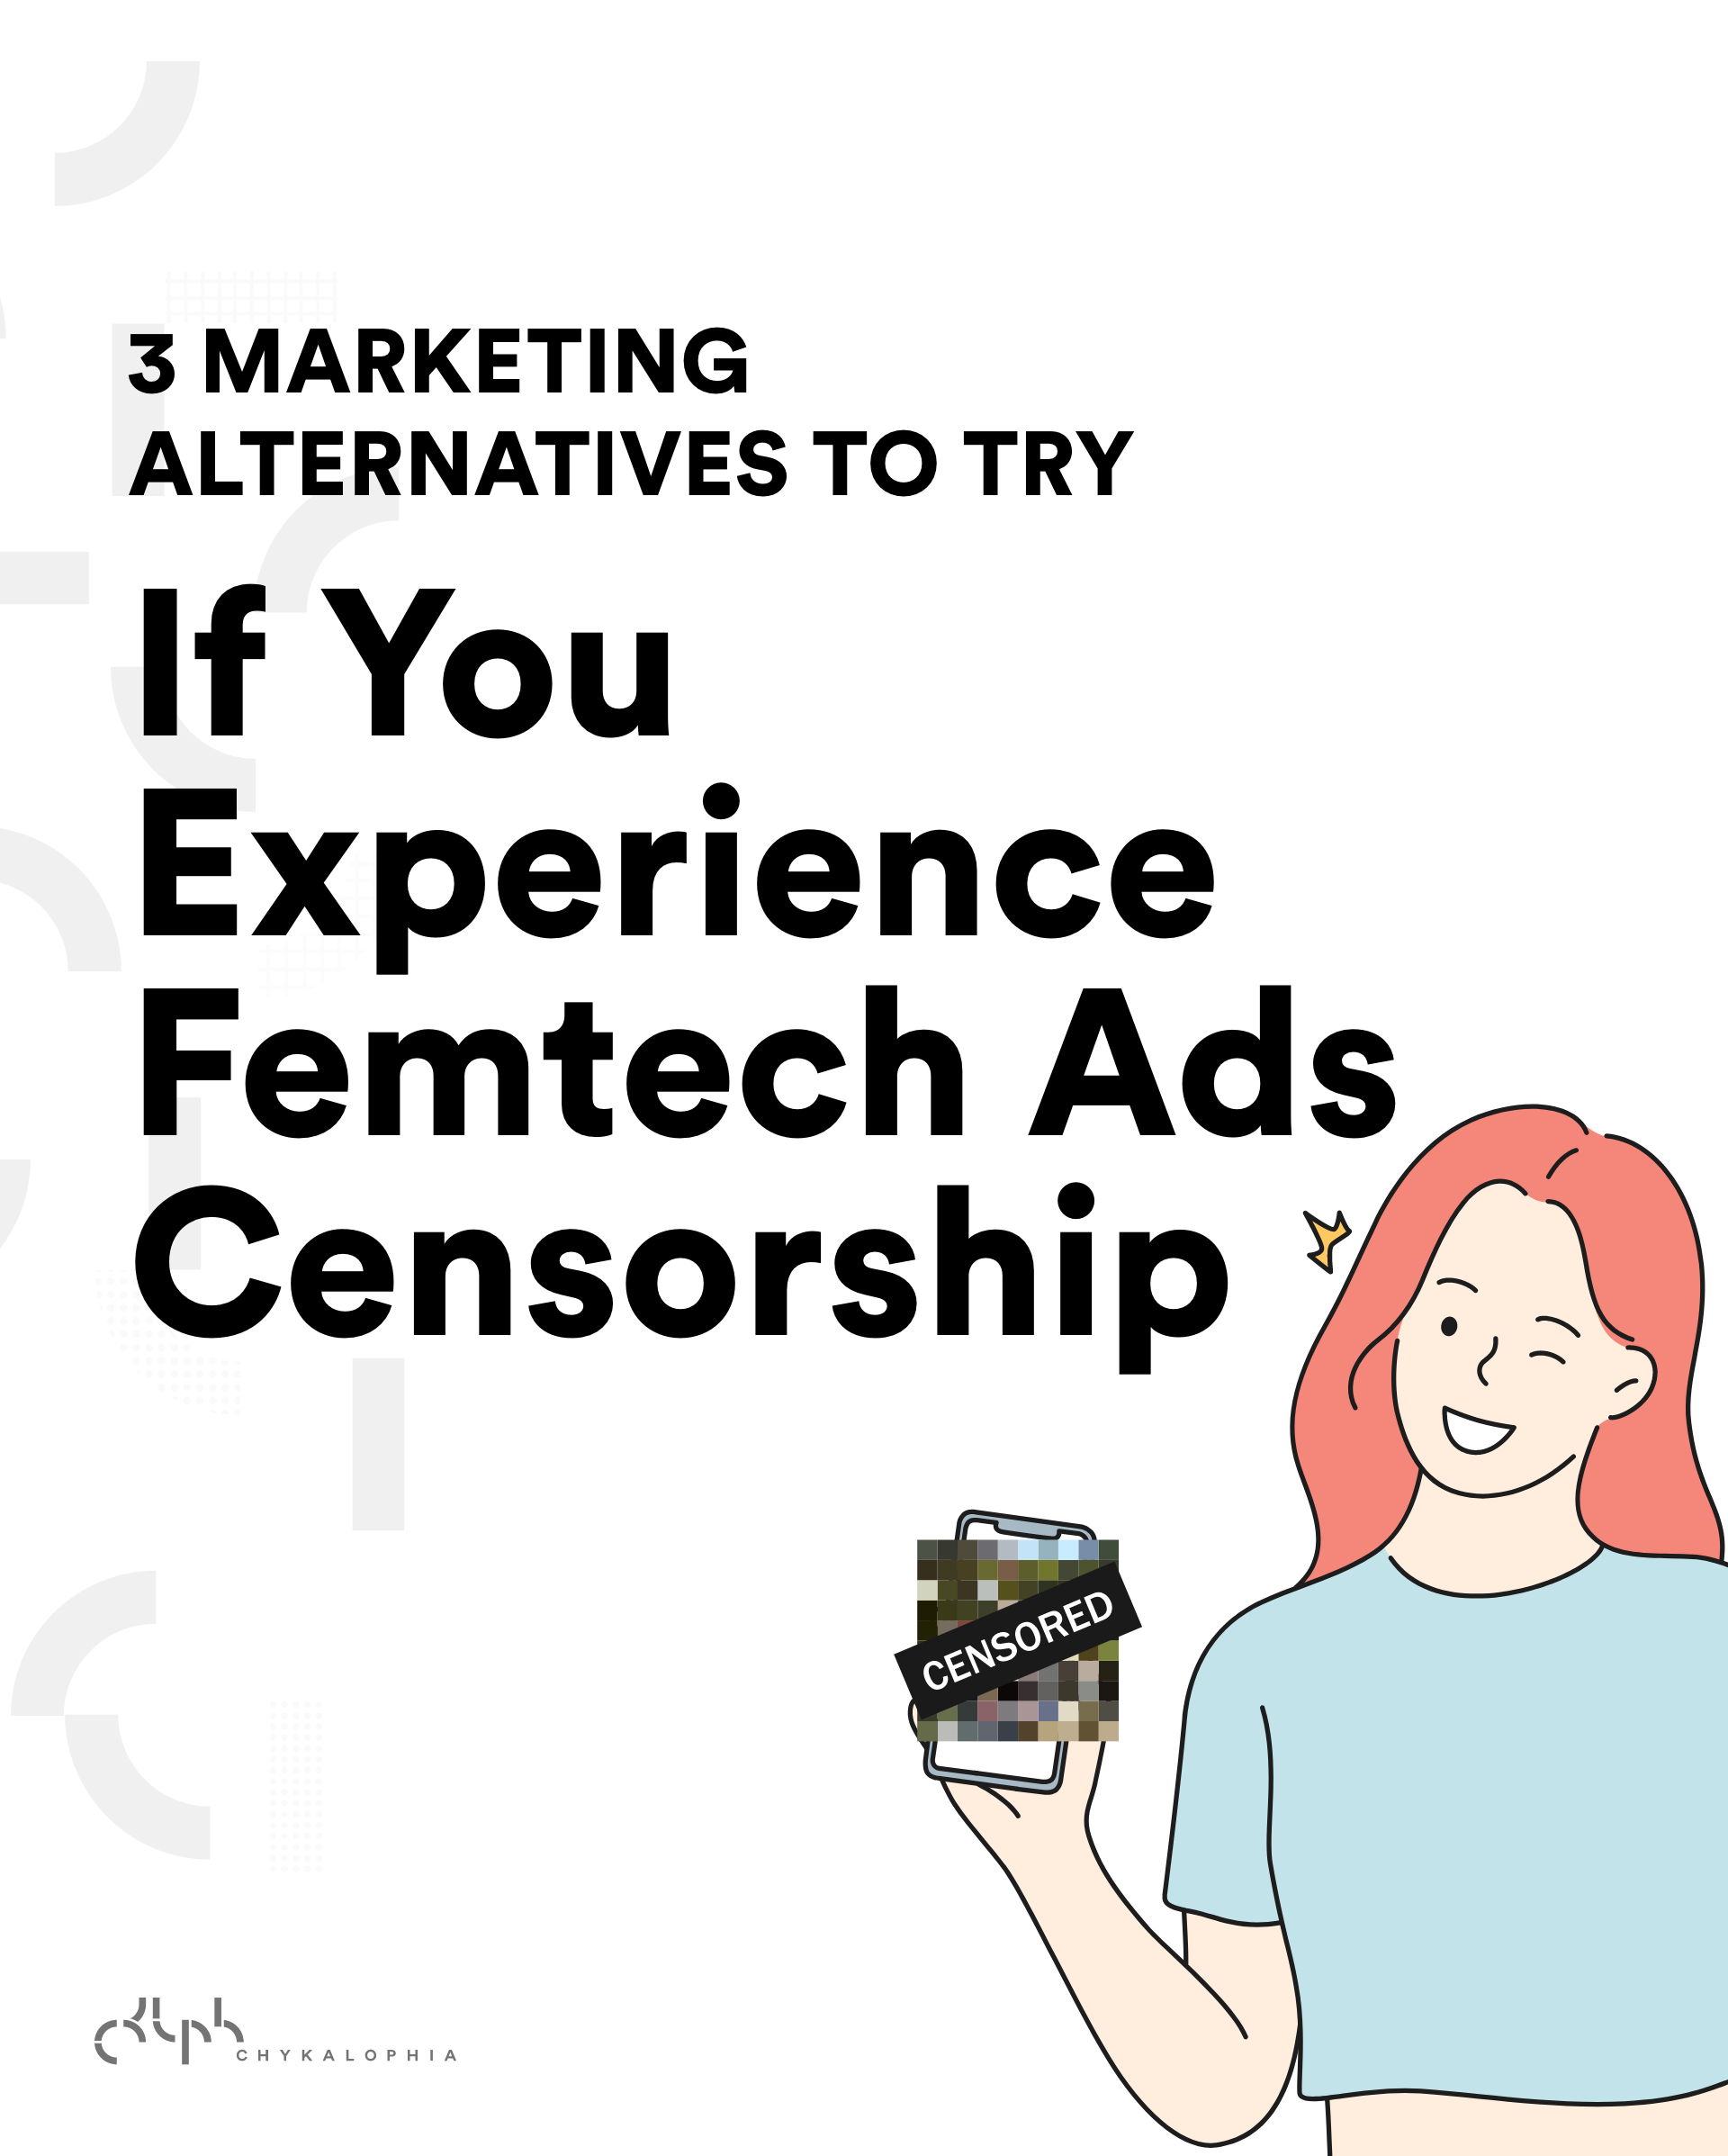 Femtech ads censorship marketing alternatives